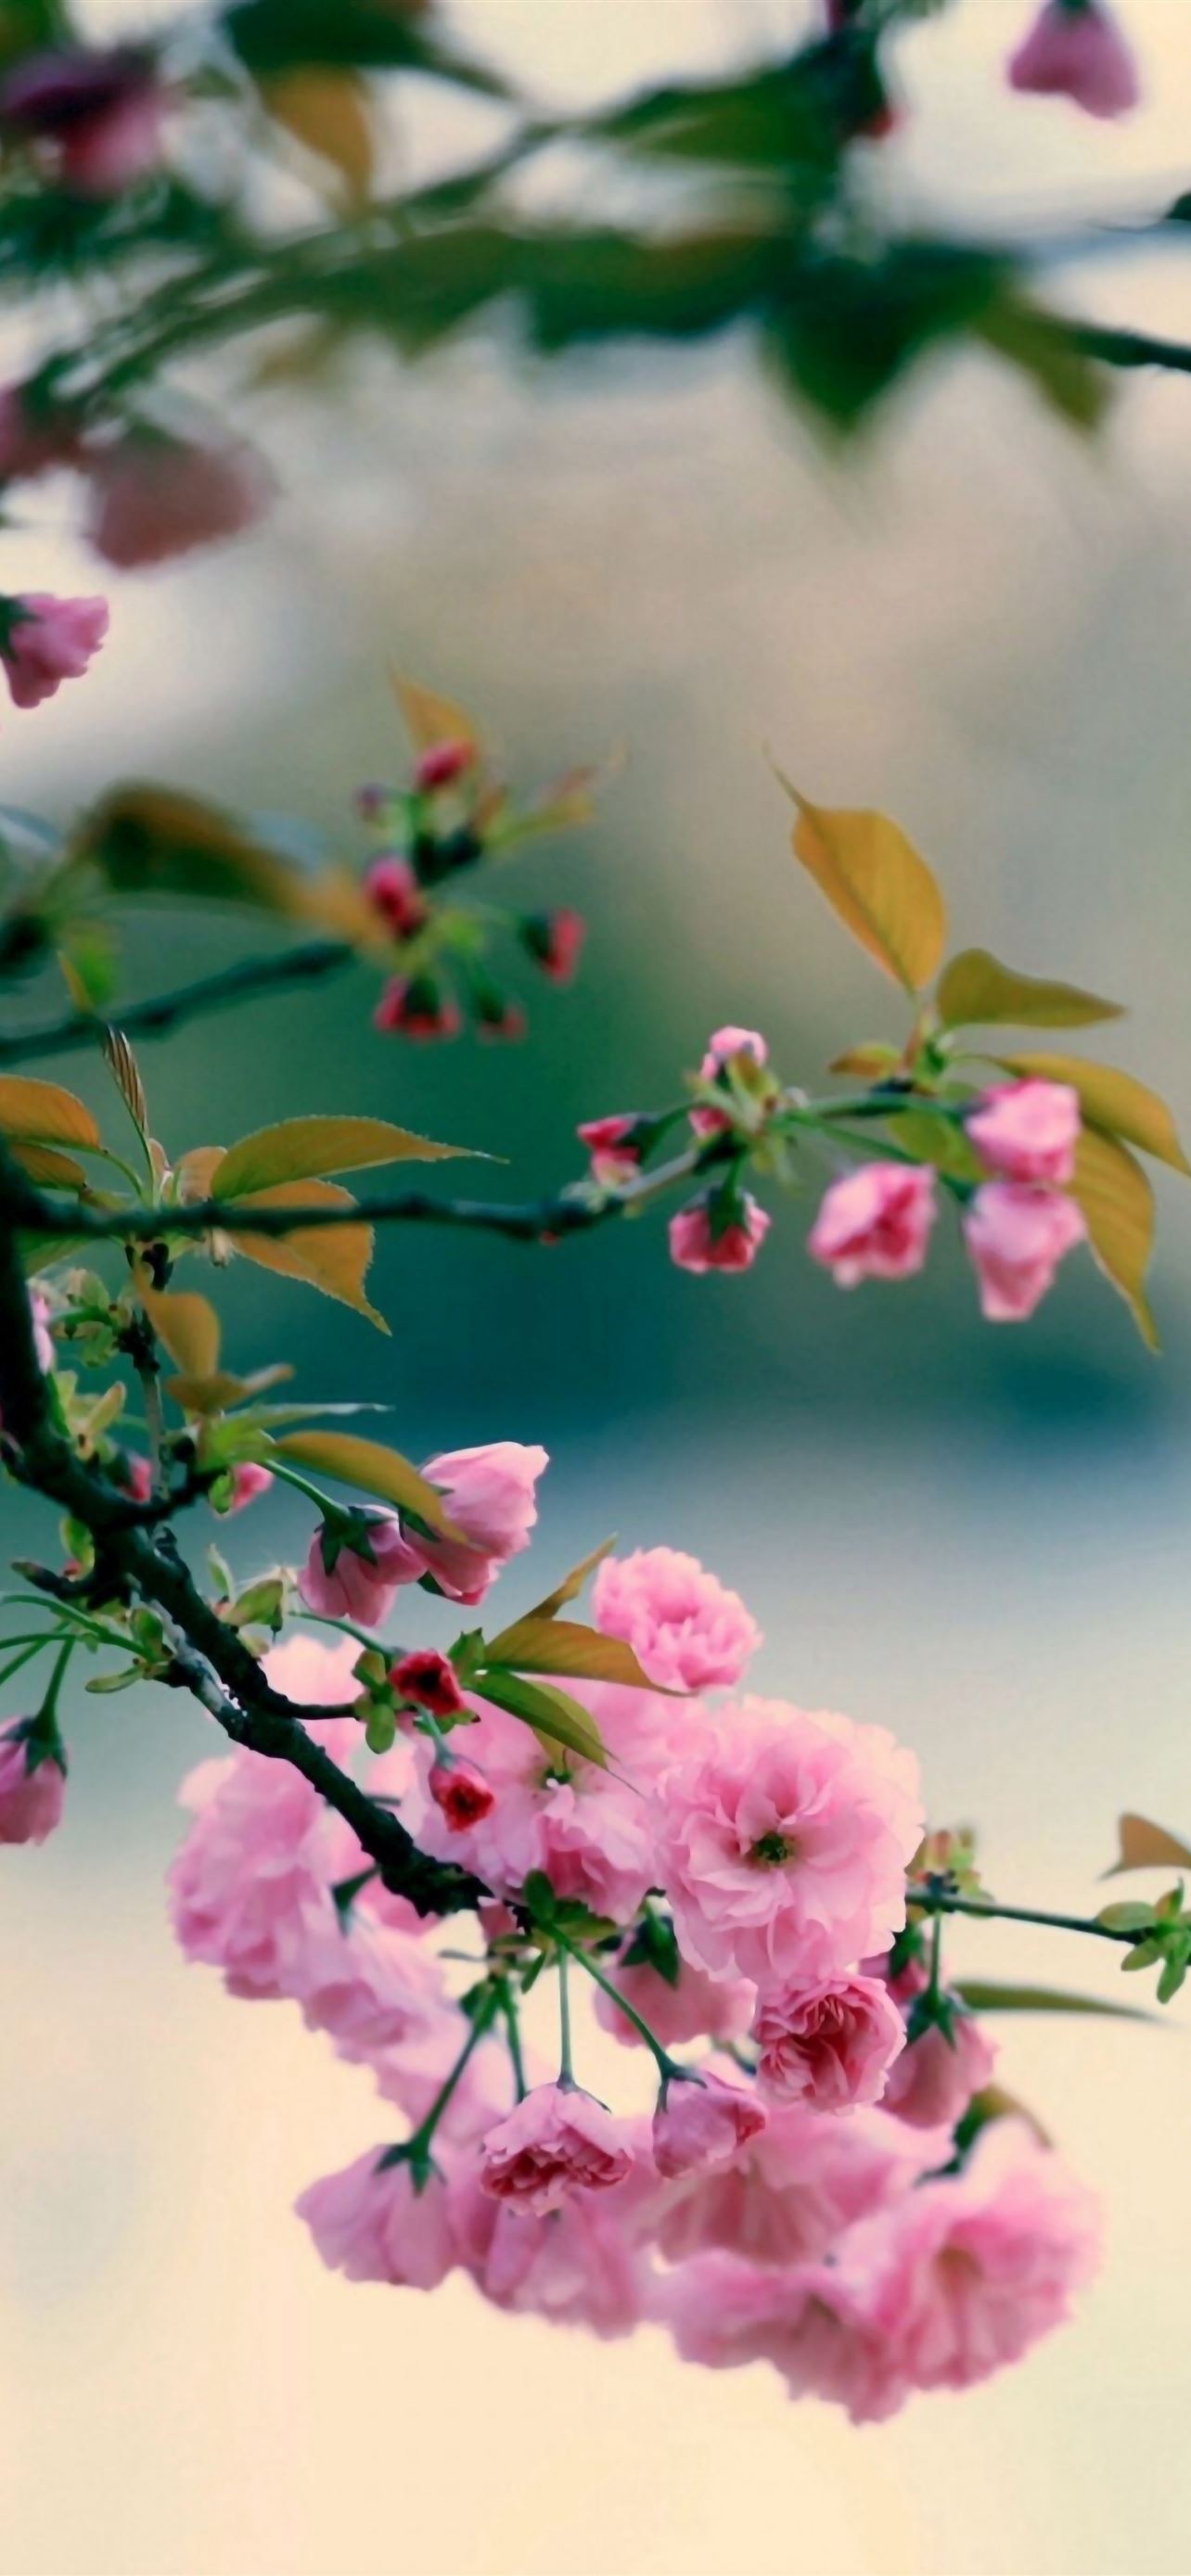 Nature Spring Plum Branch Bokeh Blur iPhone Wallpapers Free Download